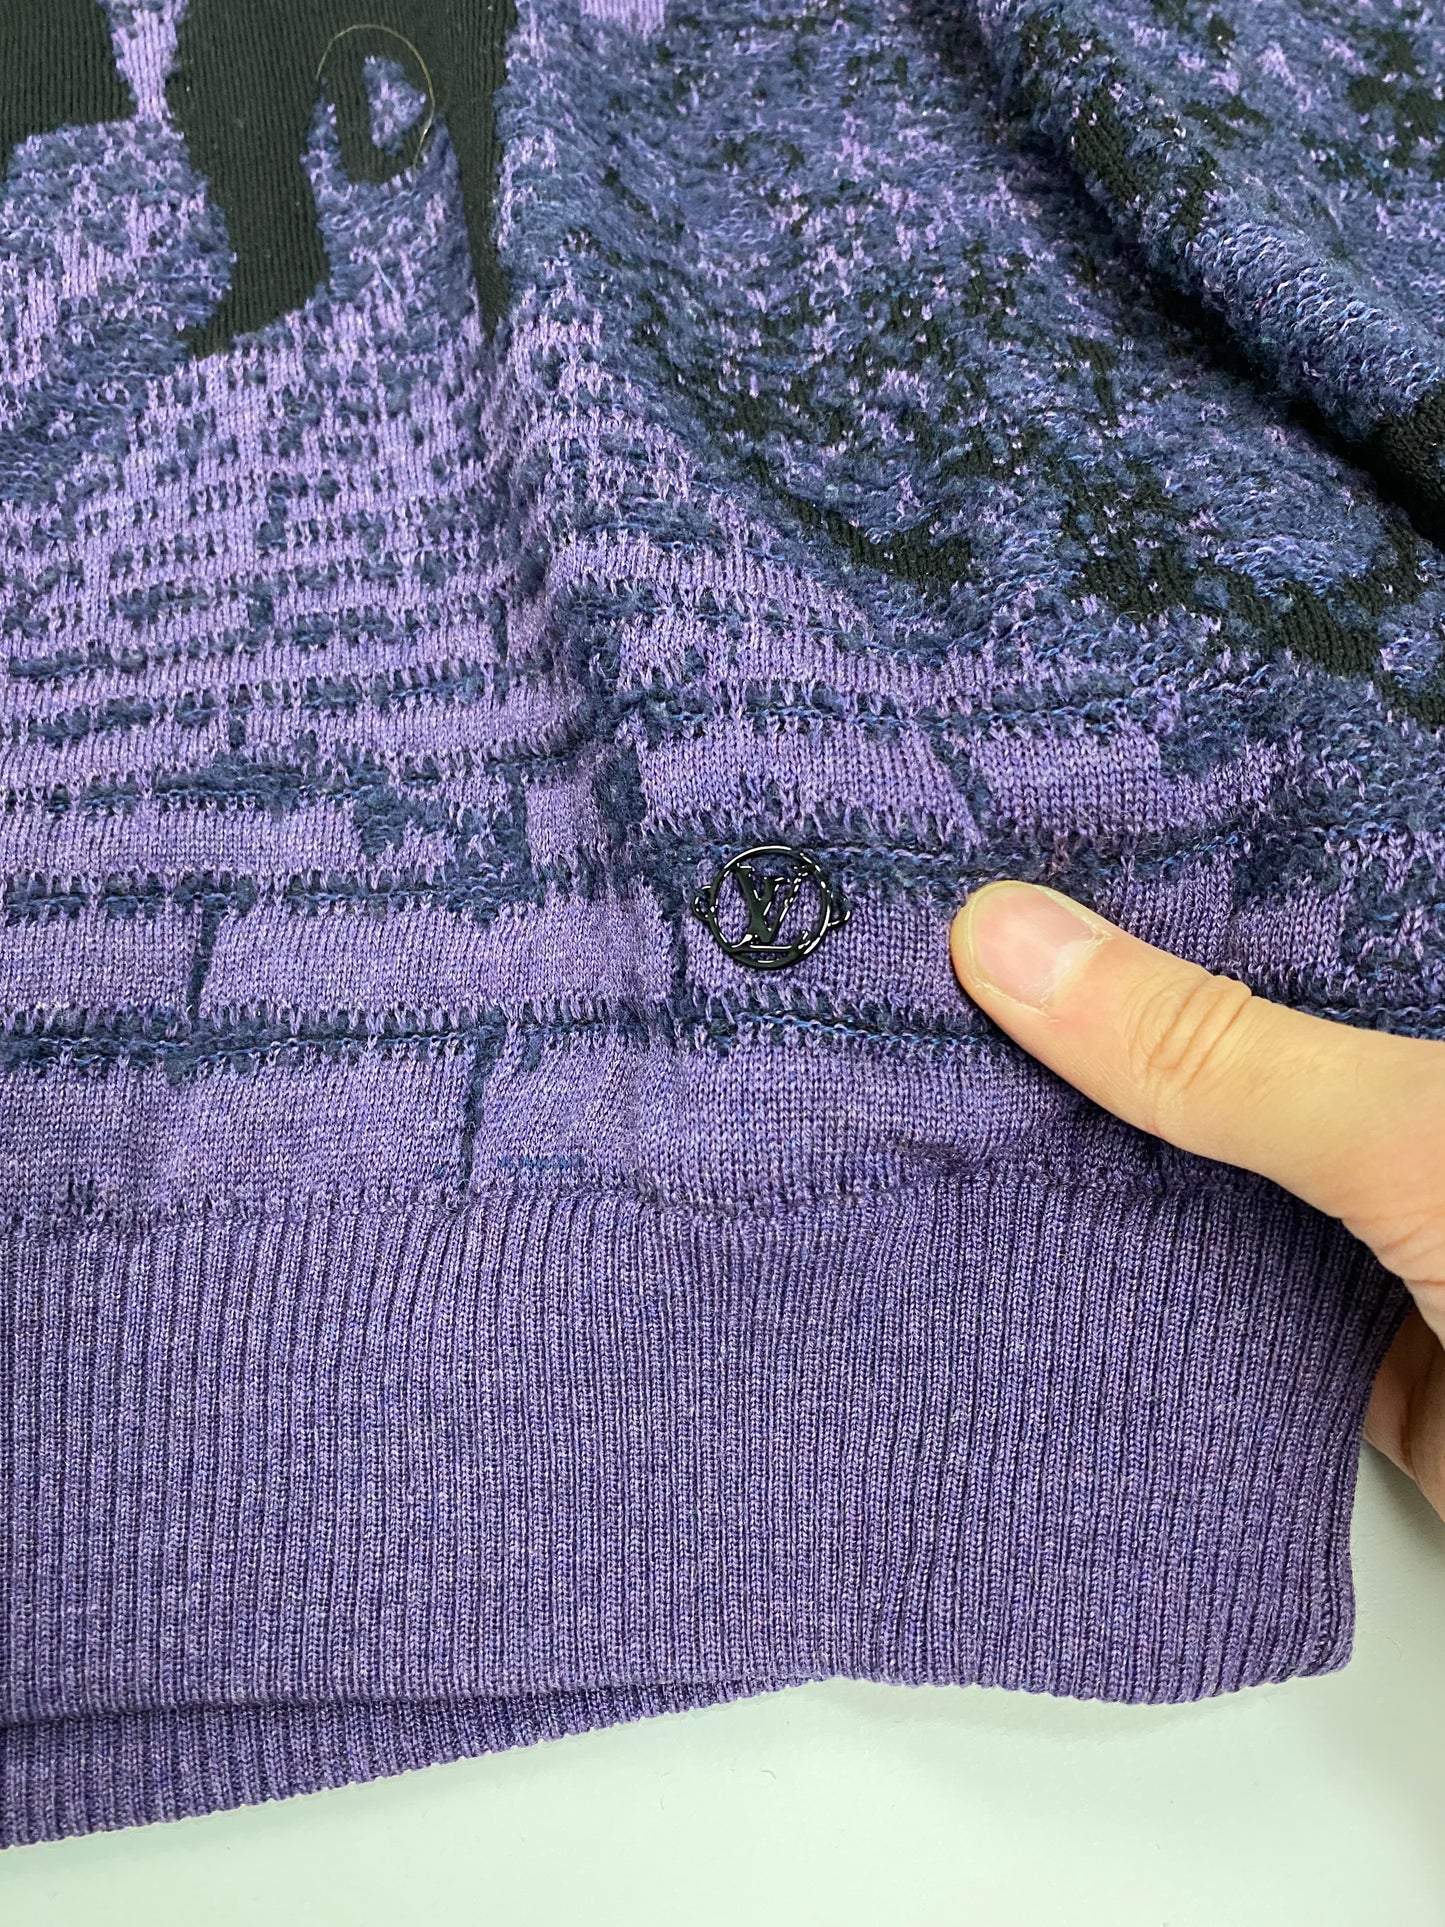 Louis Vuitton purple khaki plaid sweater - LIMITED EDITION